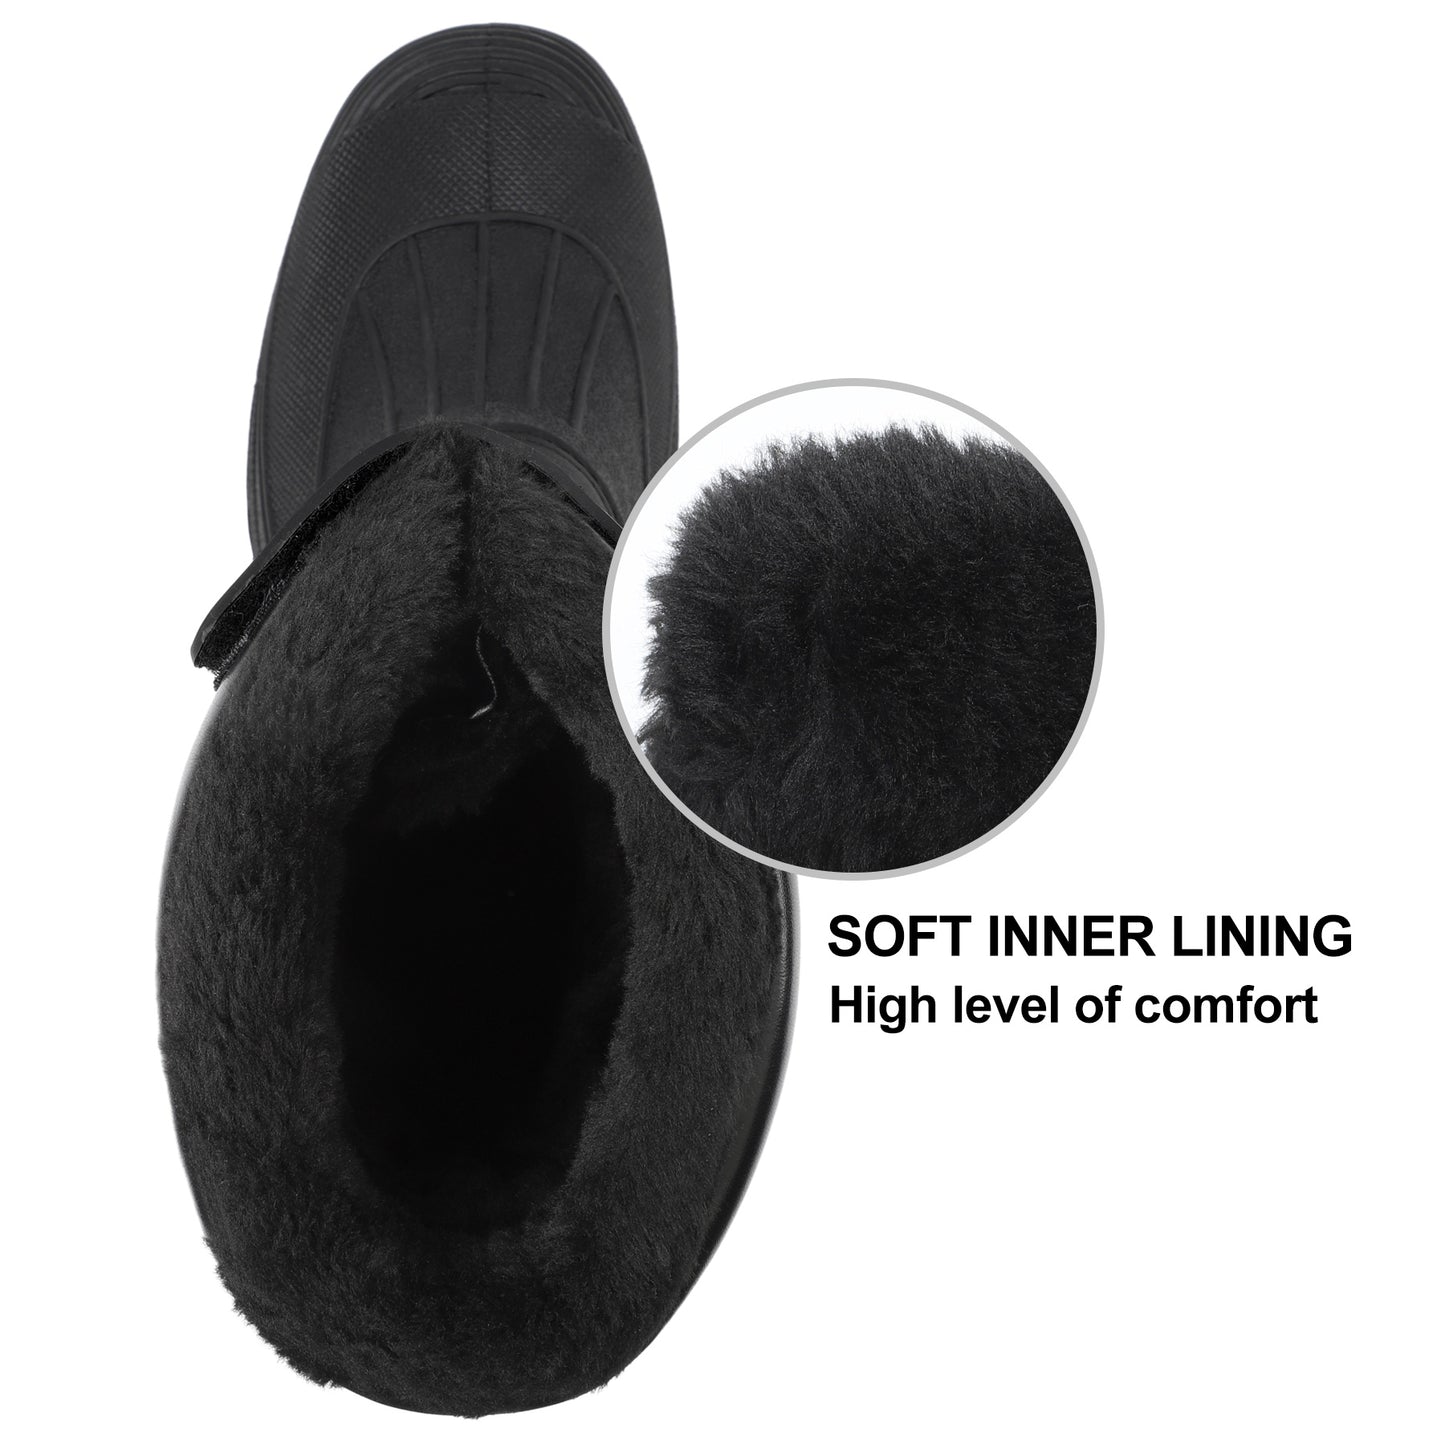 Knixmax Men's Snow Boots Black Waterproof & Fur Lined Winter Boots